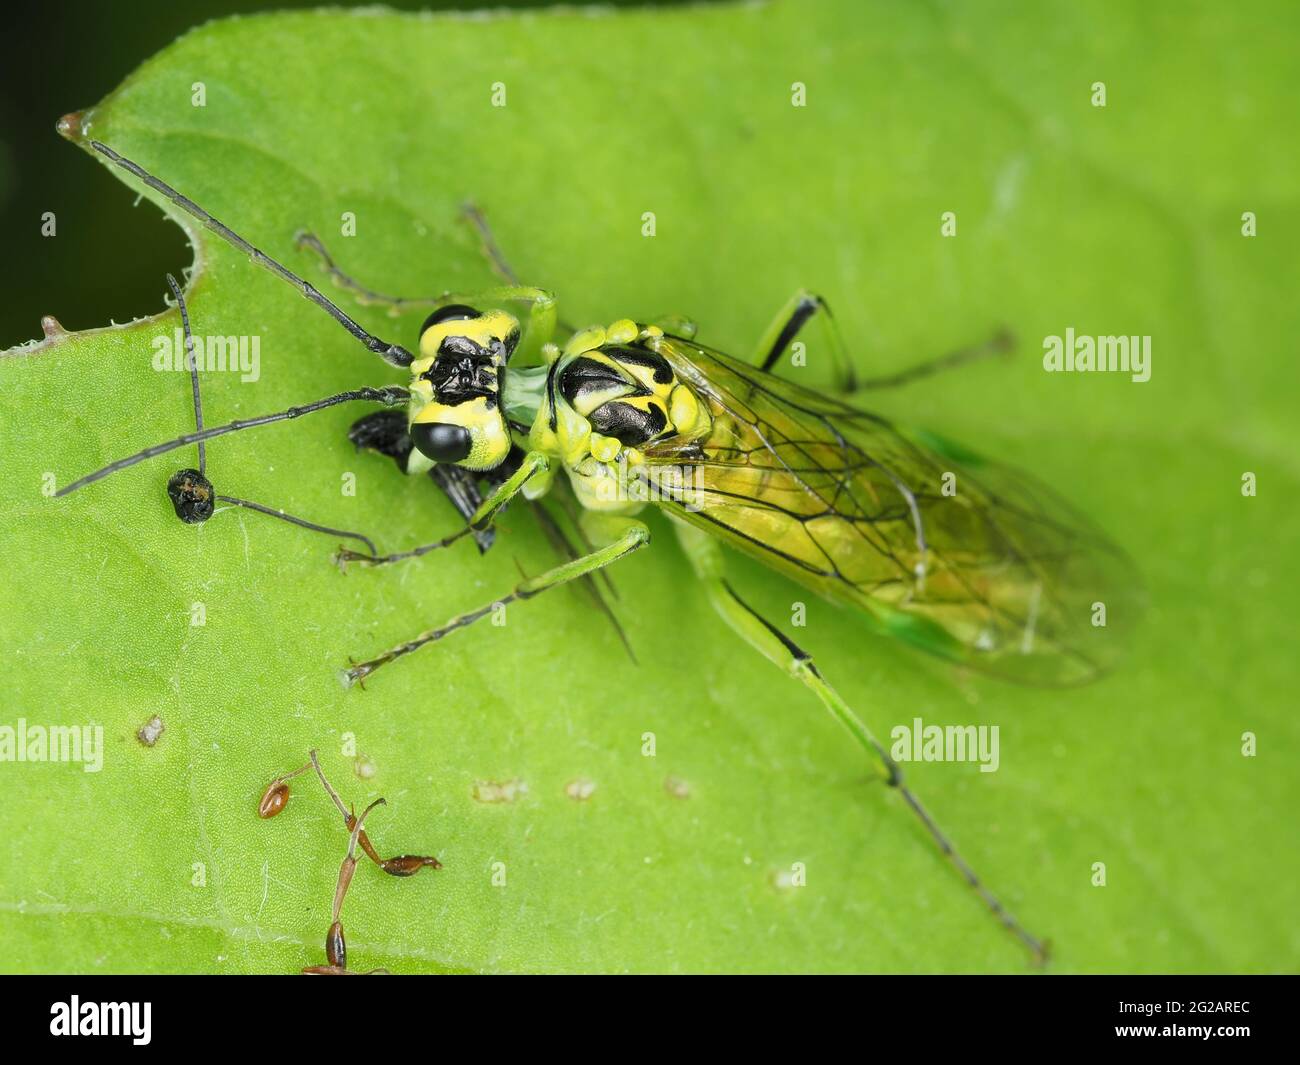 Green sawfly (most likely Tenthredo rhammisia) eating prey Stock Photo